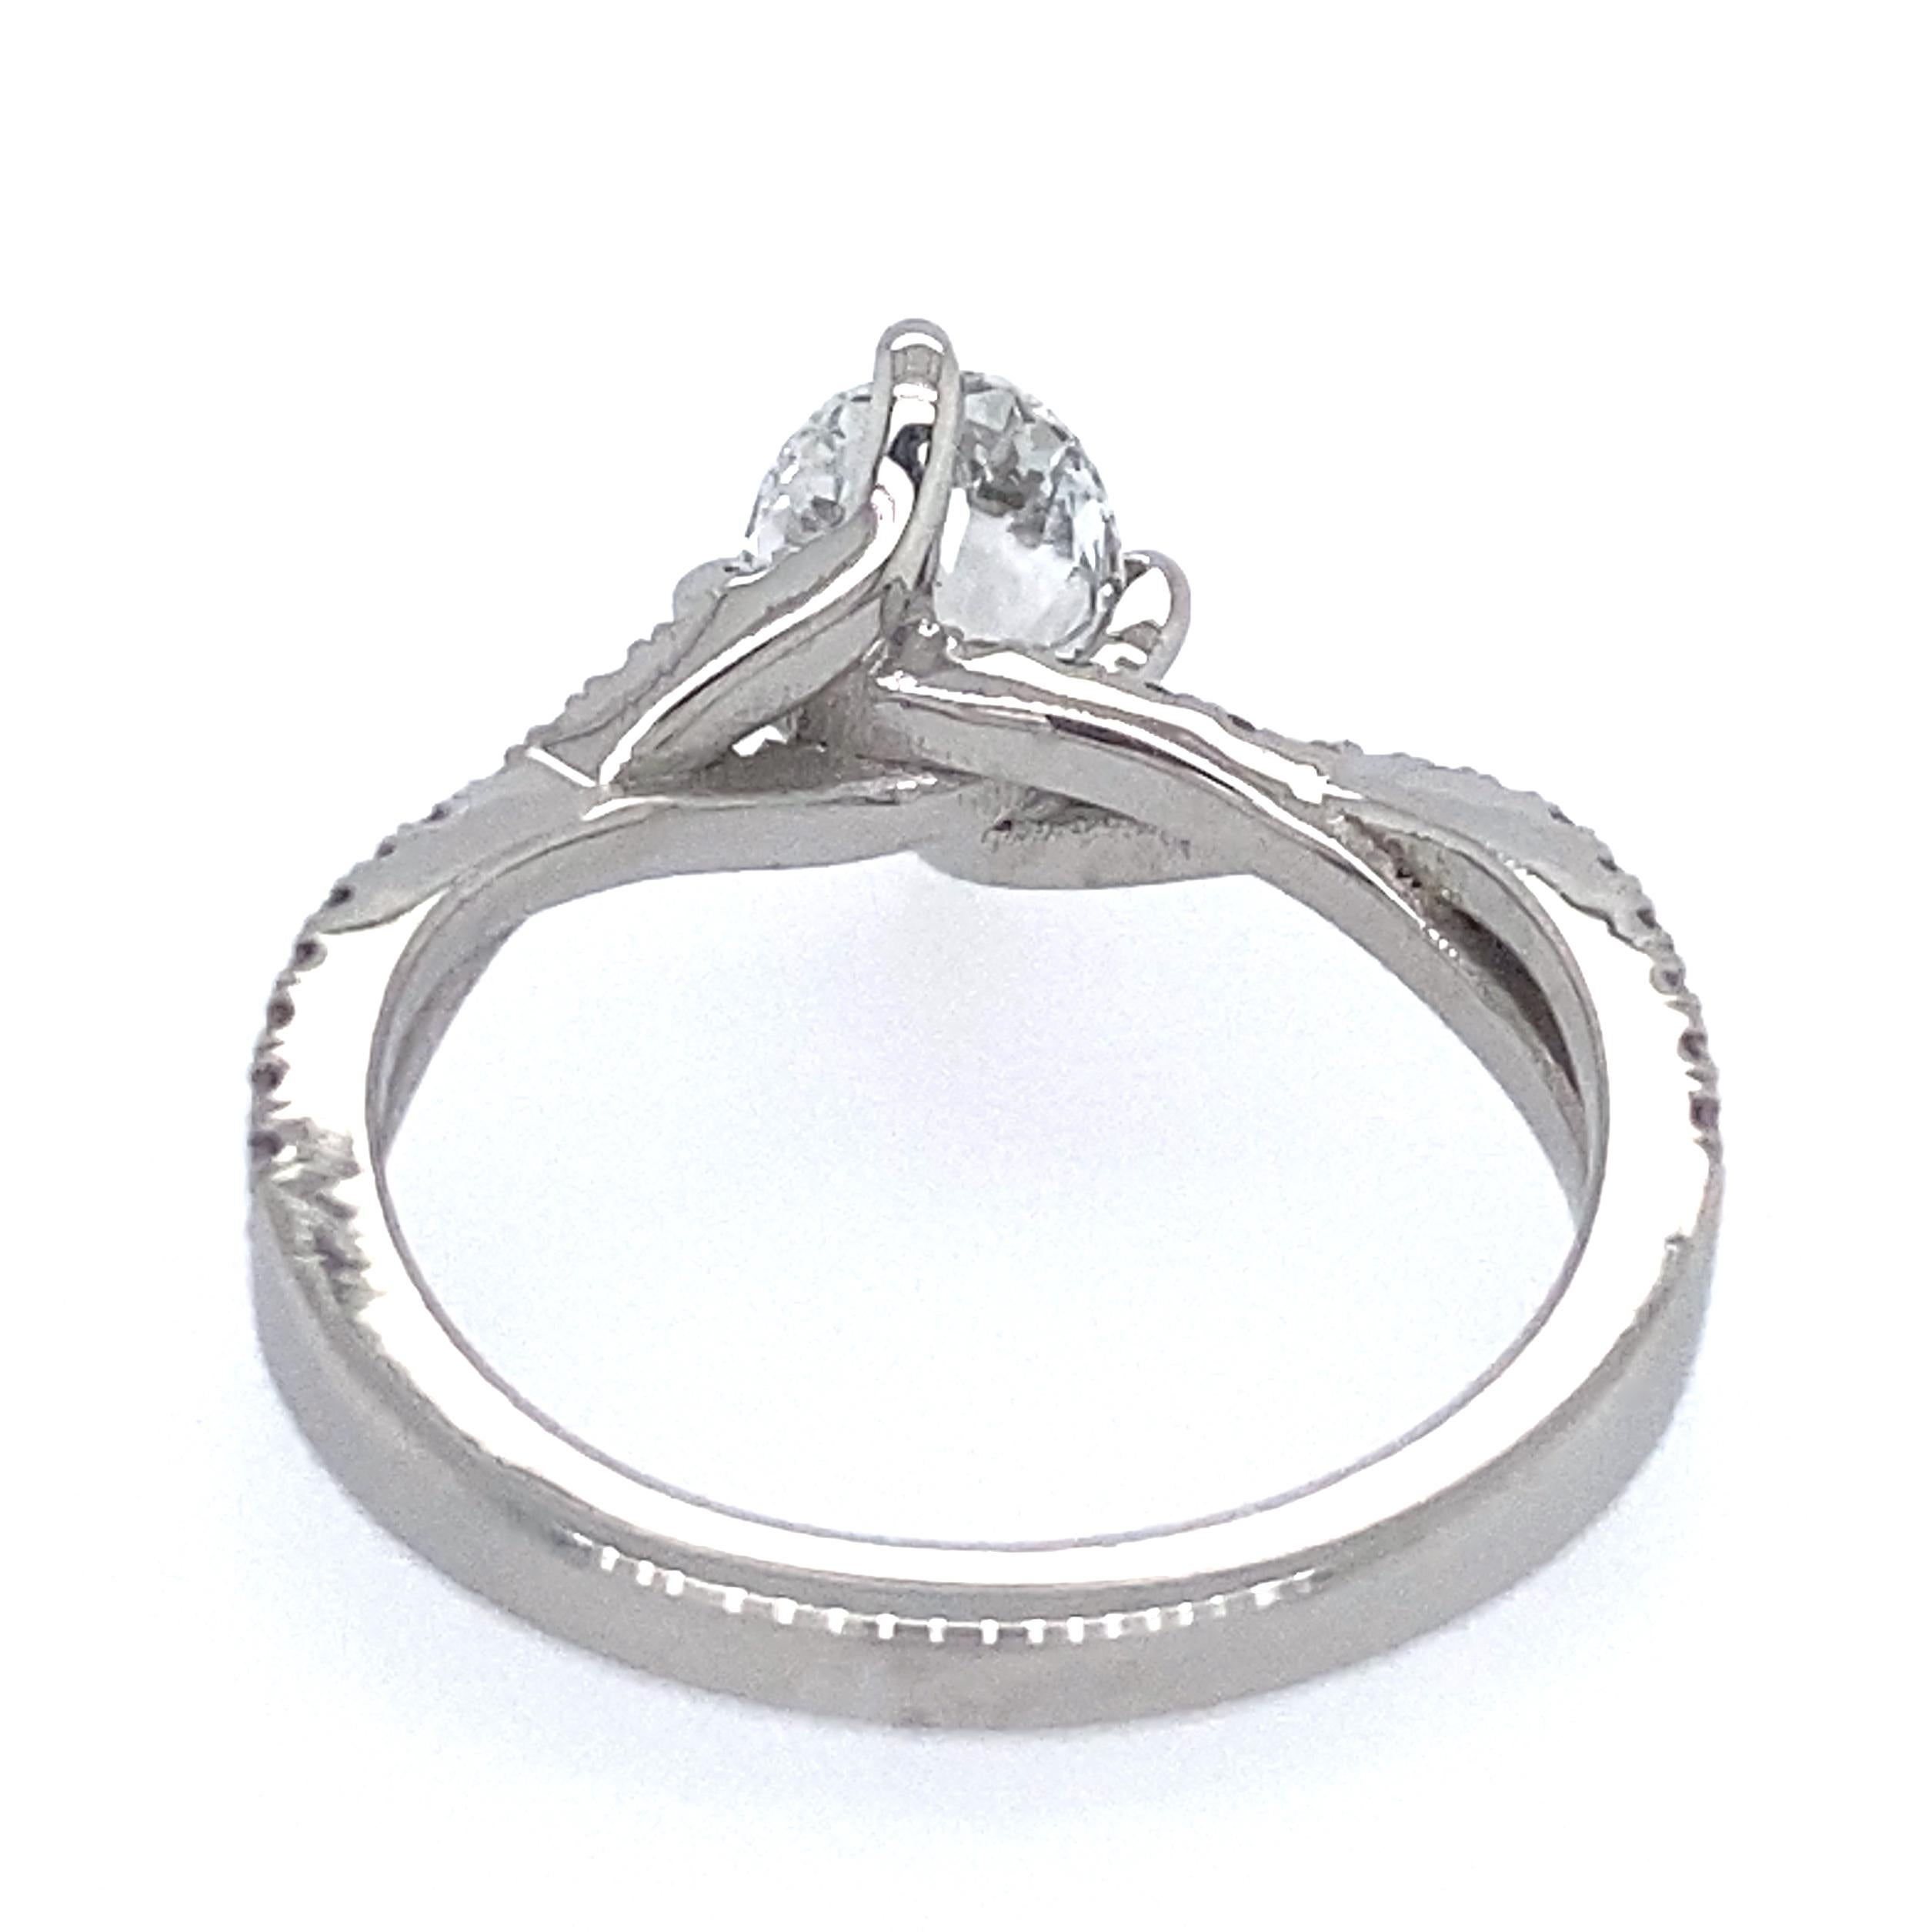 1.09 Carat GAI-Certified Oval Diamond Ring in Criss-Cross Platinum Setting 1